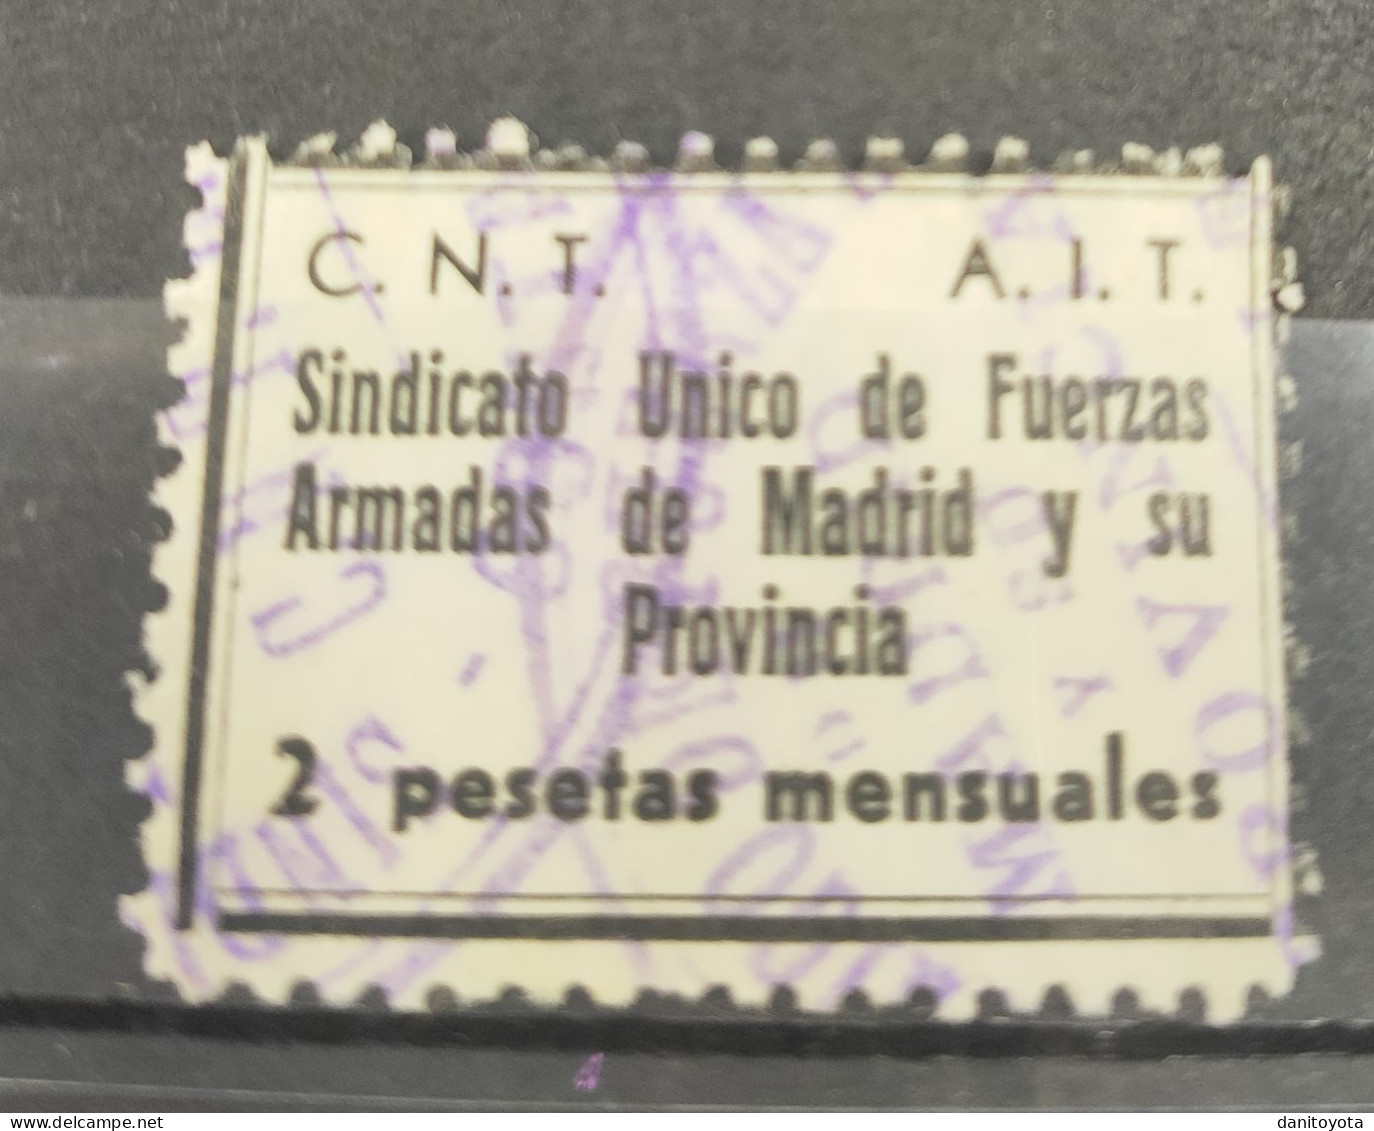 MADRID. EDIFIL N/C. 2 PTAS NEGRO CNT- AIT. - Republikeinse Uitgaven